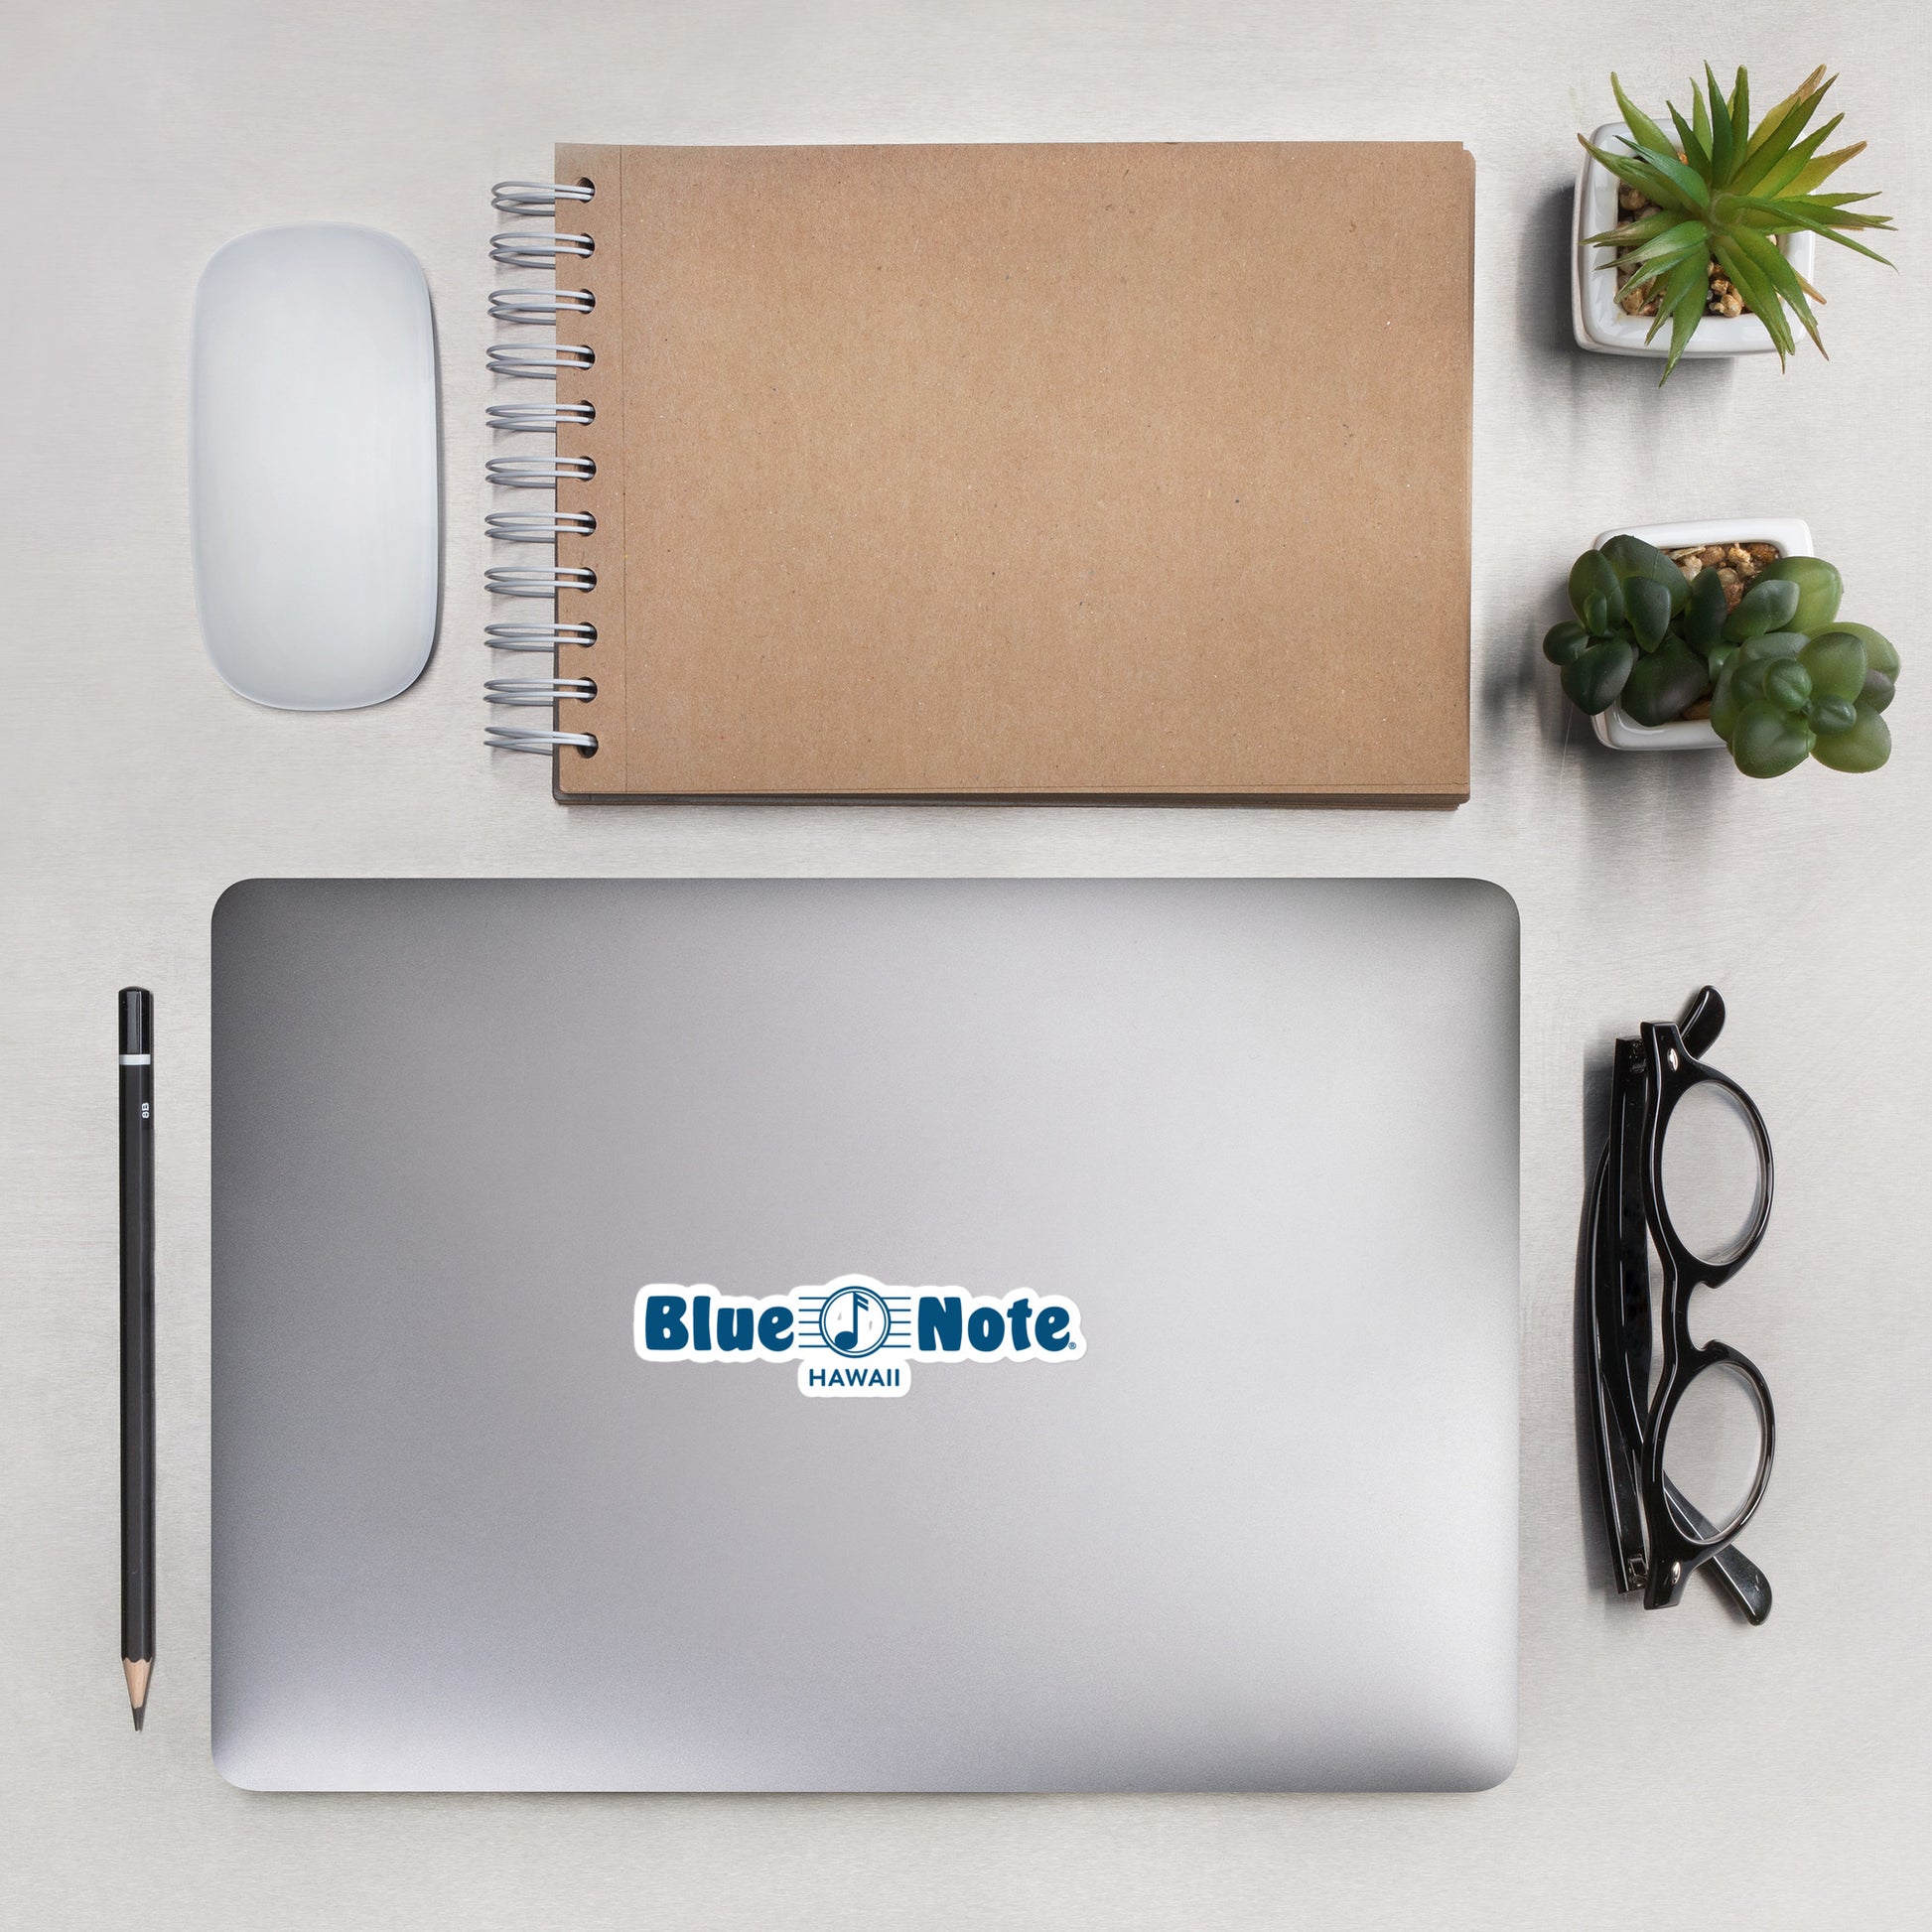 Blue Note Bubble-Free Logo Sticker